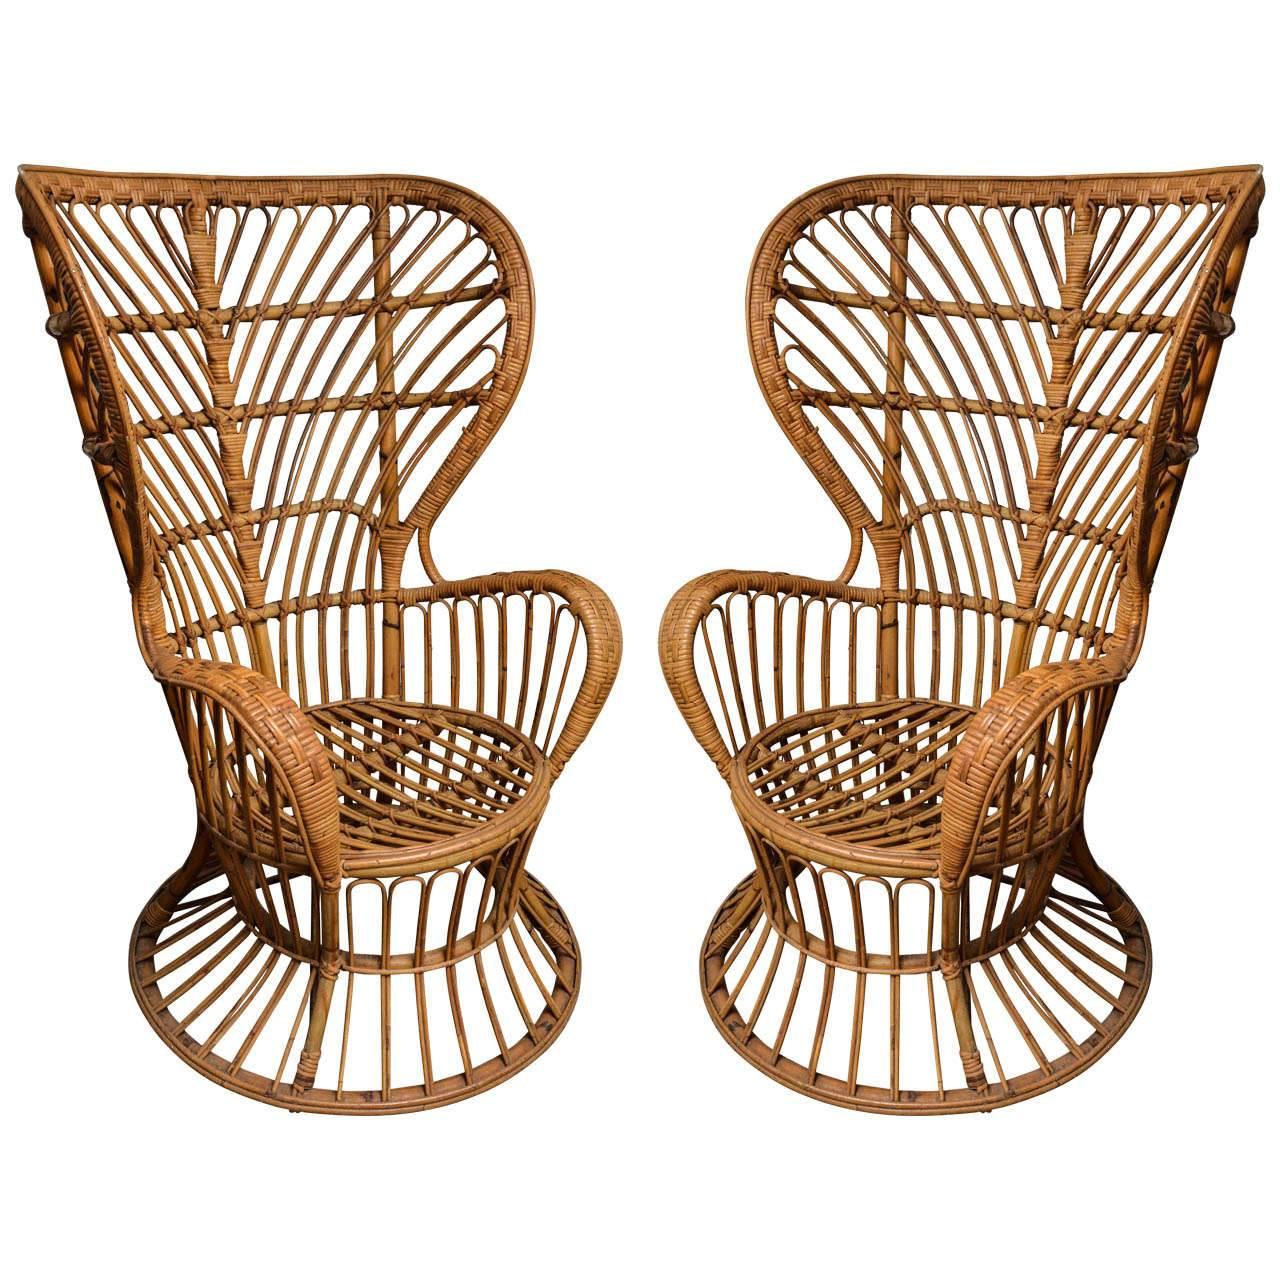 Pair of Cane Chairs by Lio Carminati